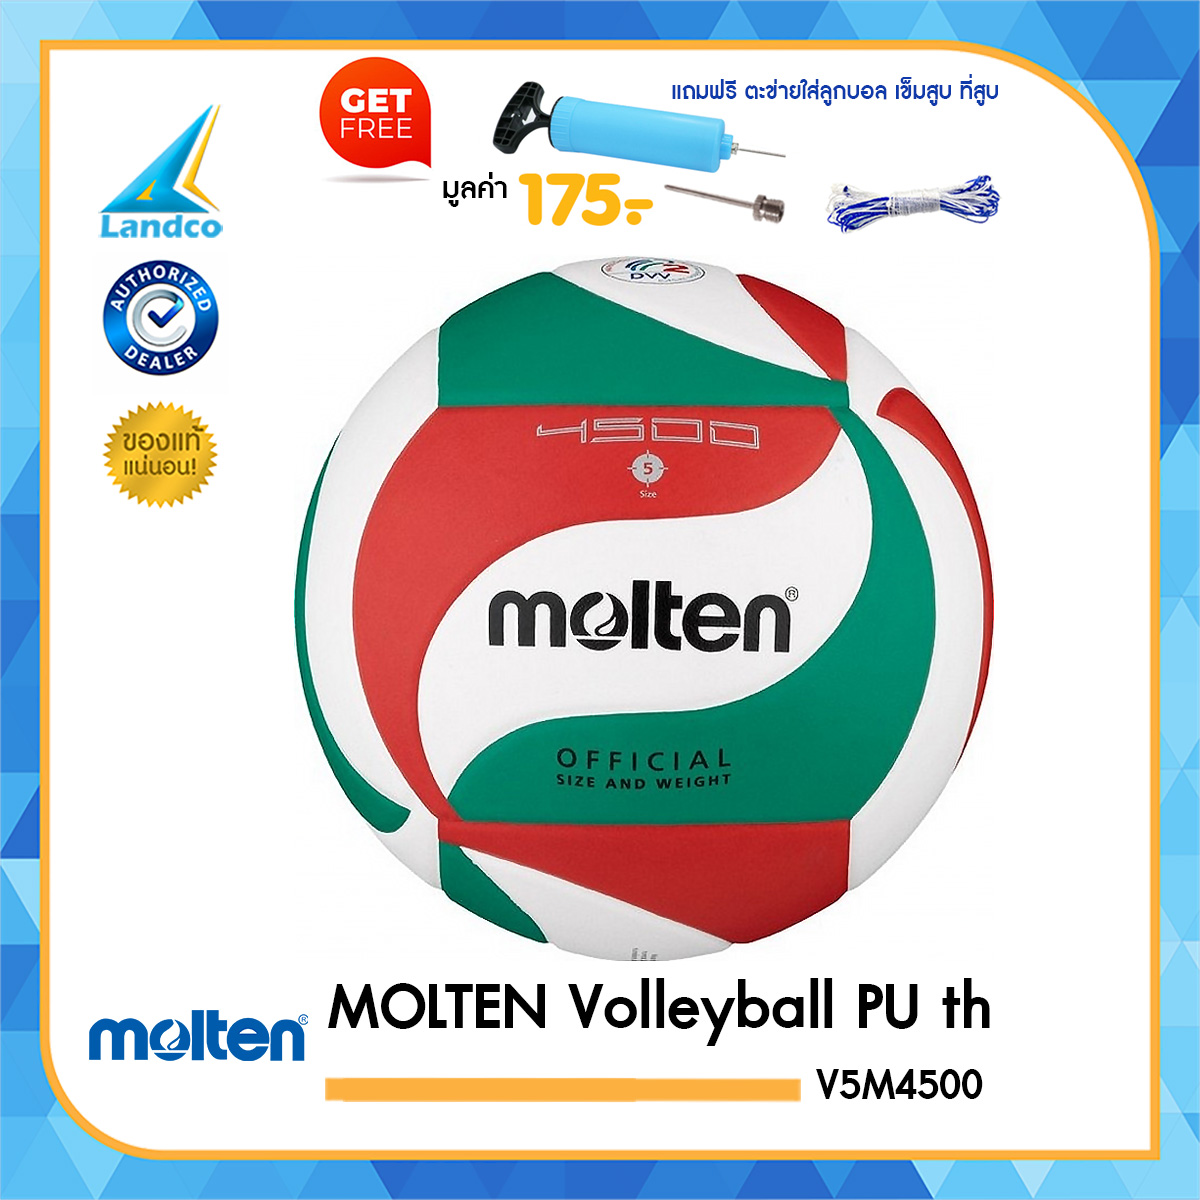 Molten Volleyball MOT PU รุ่น V5M4500 แถมฟรี ตาข่ายใส่ลูกวอลเลย์บอล + เข็มสูบสูบลม + สูบมือ SPL